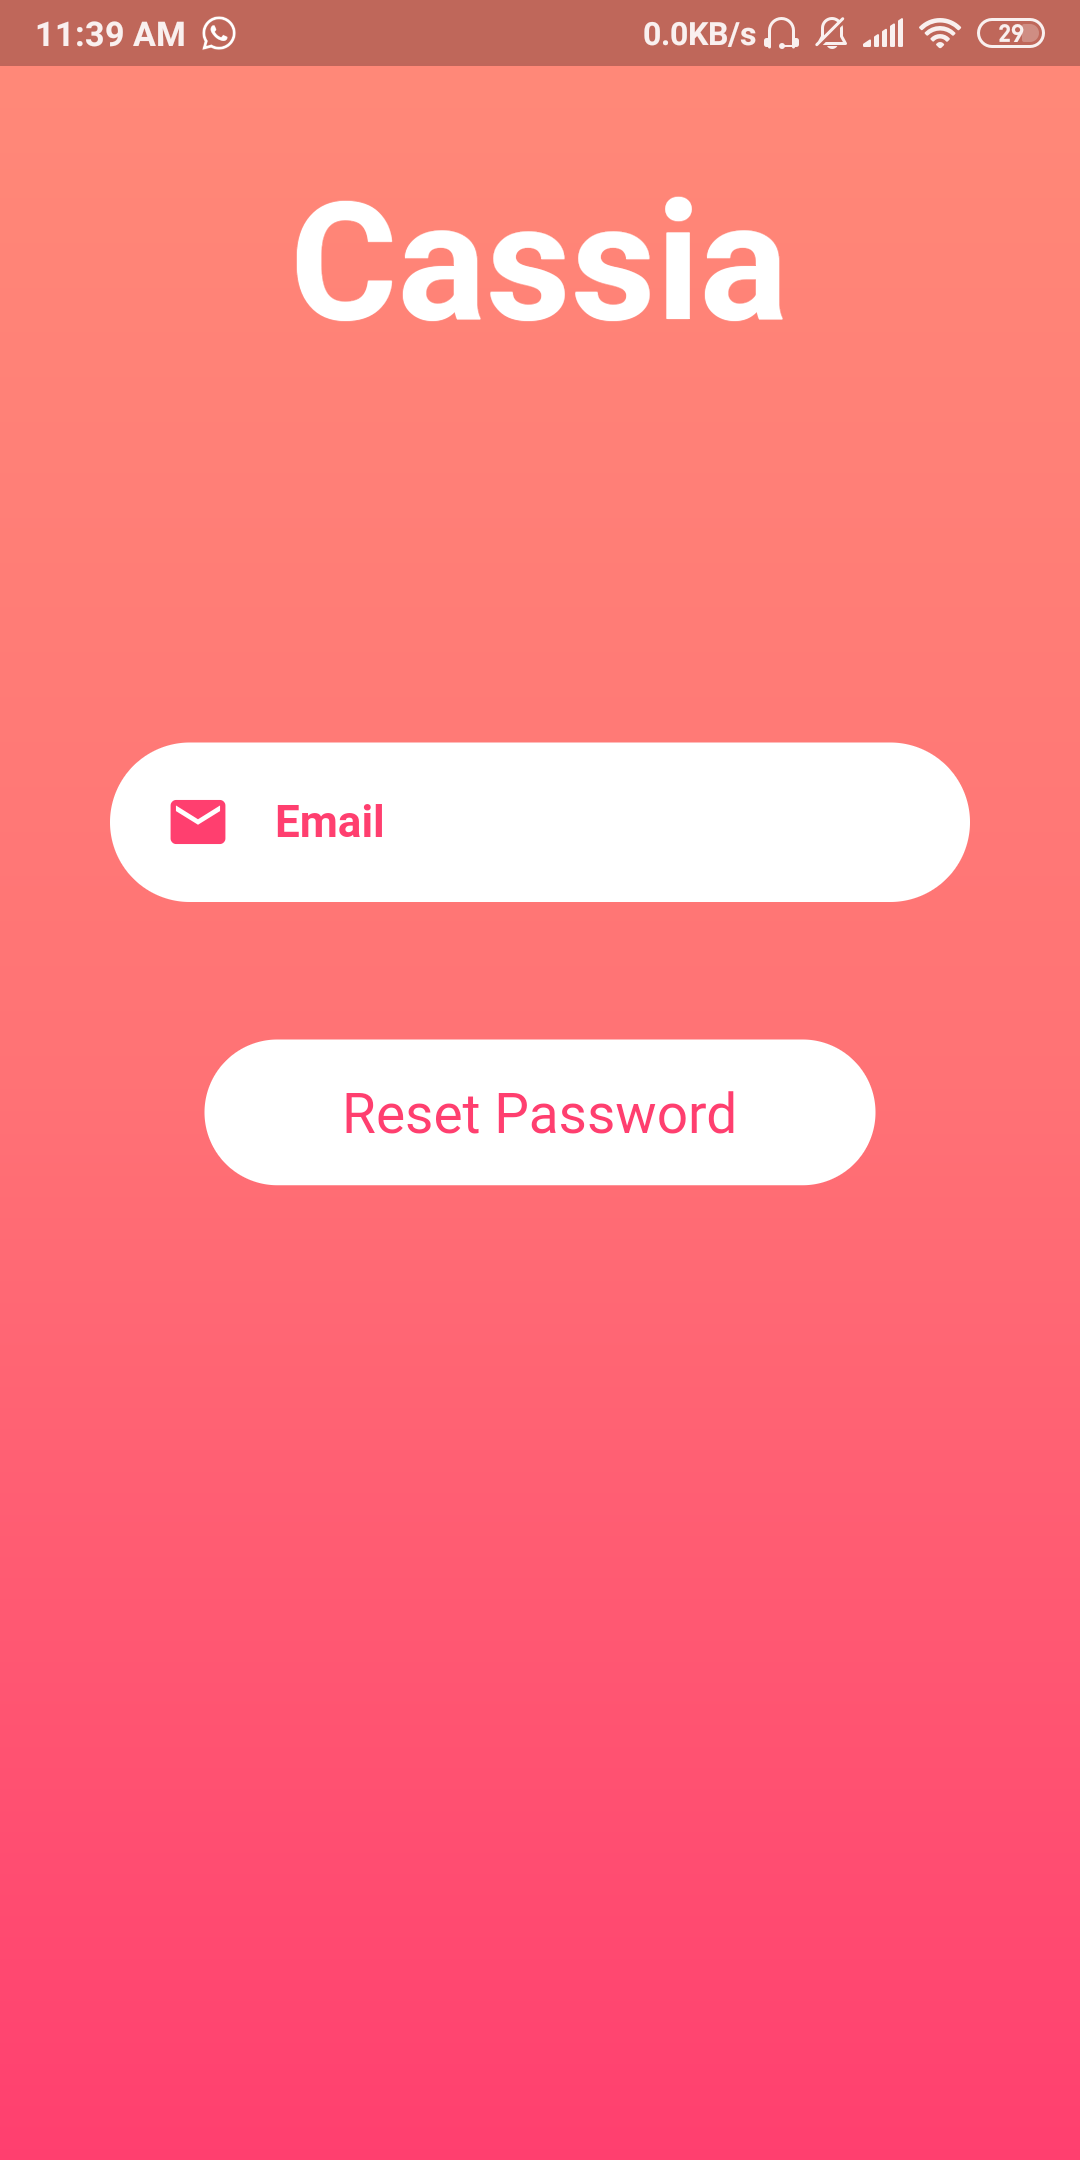 reset password image